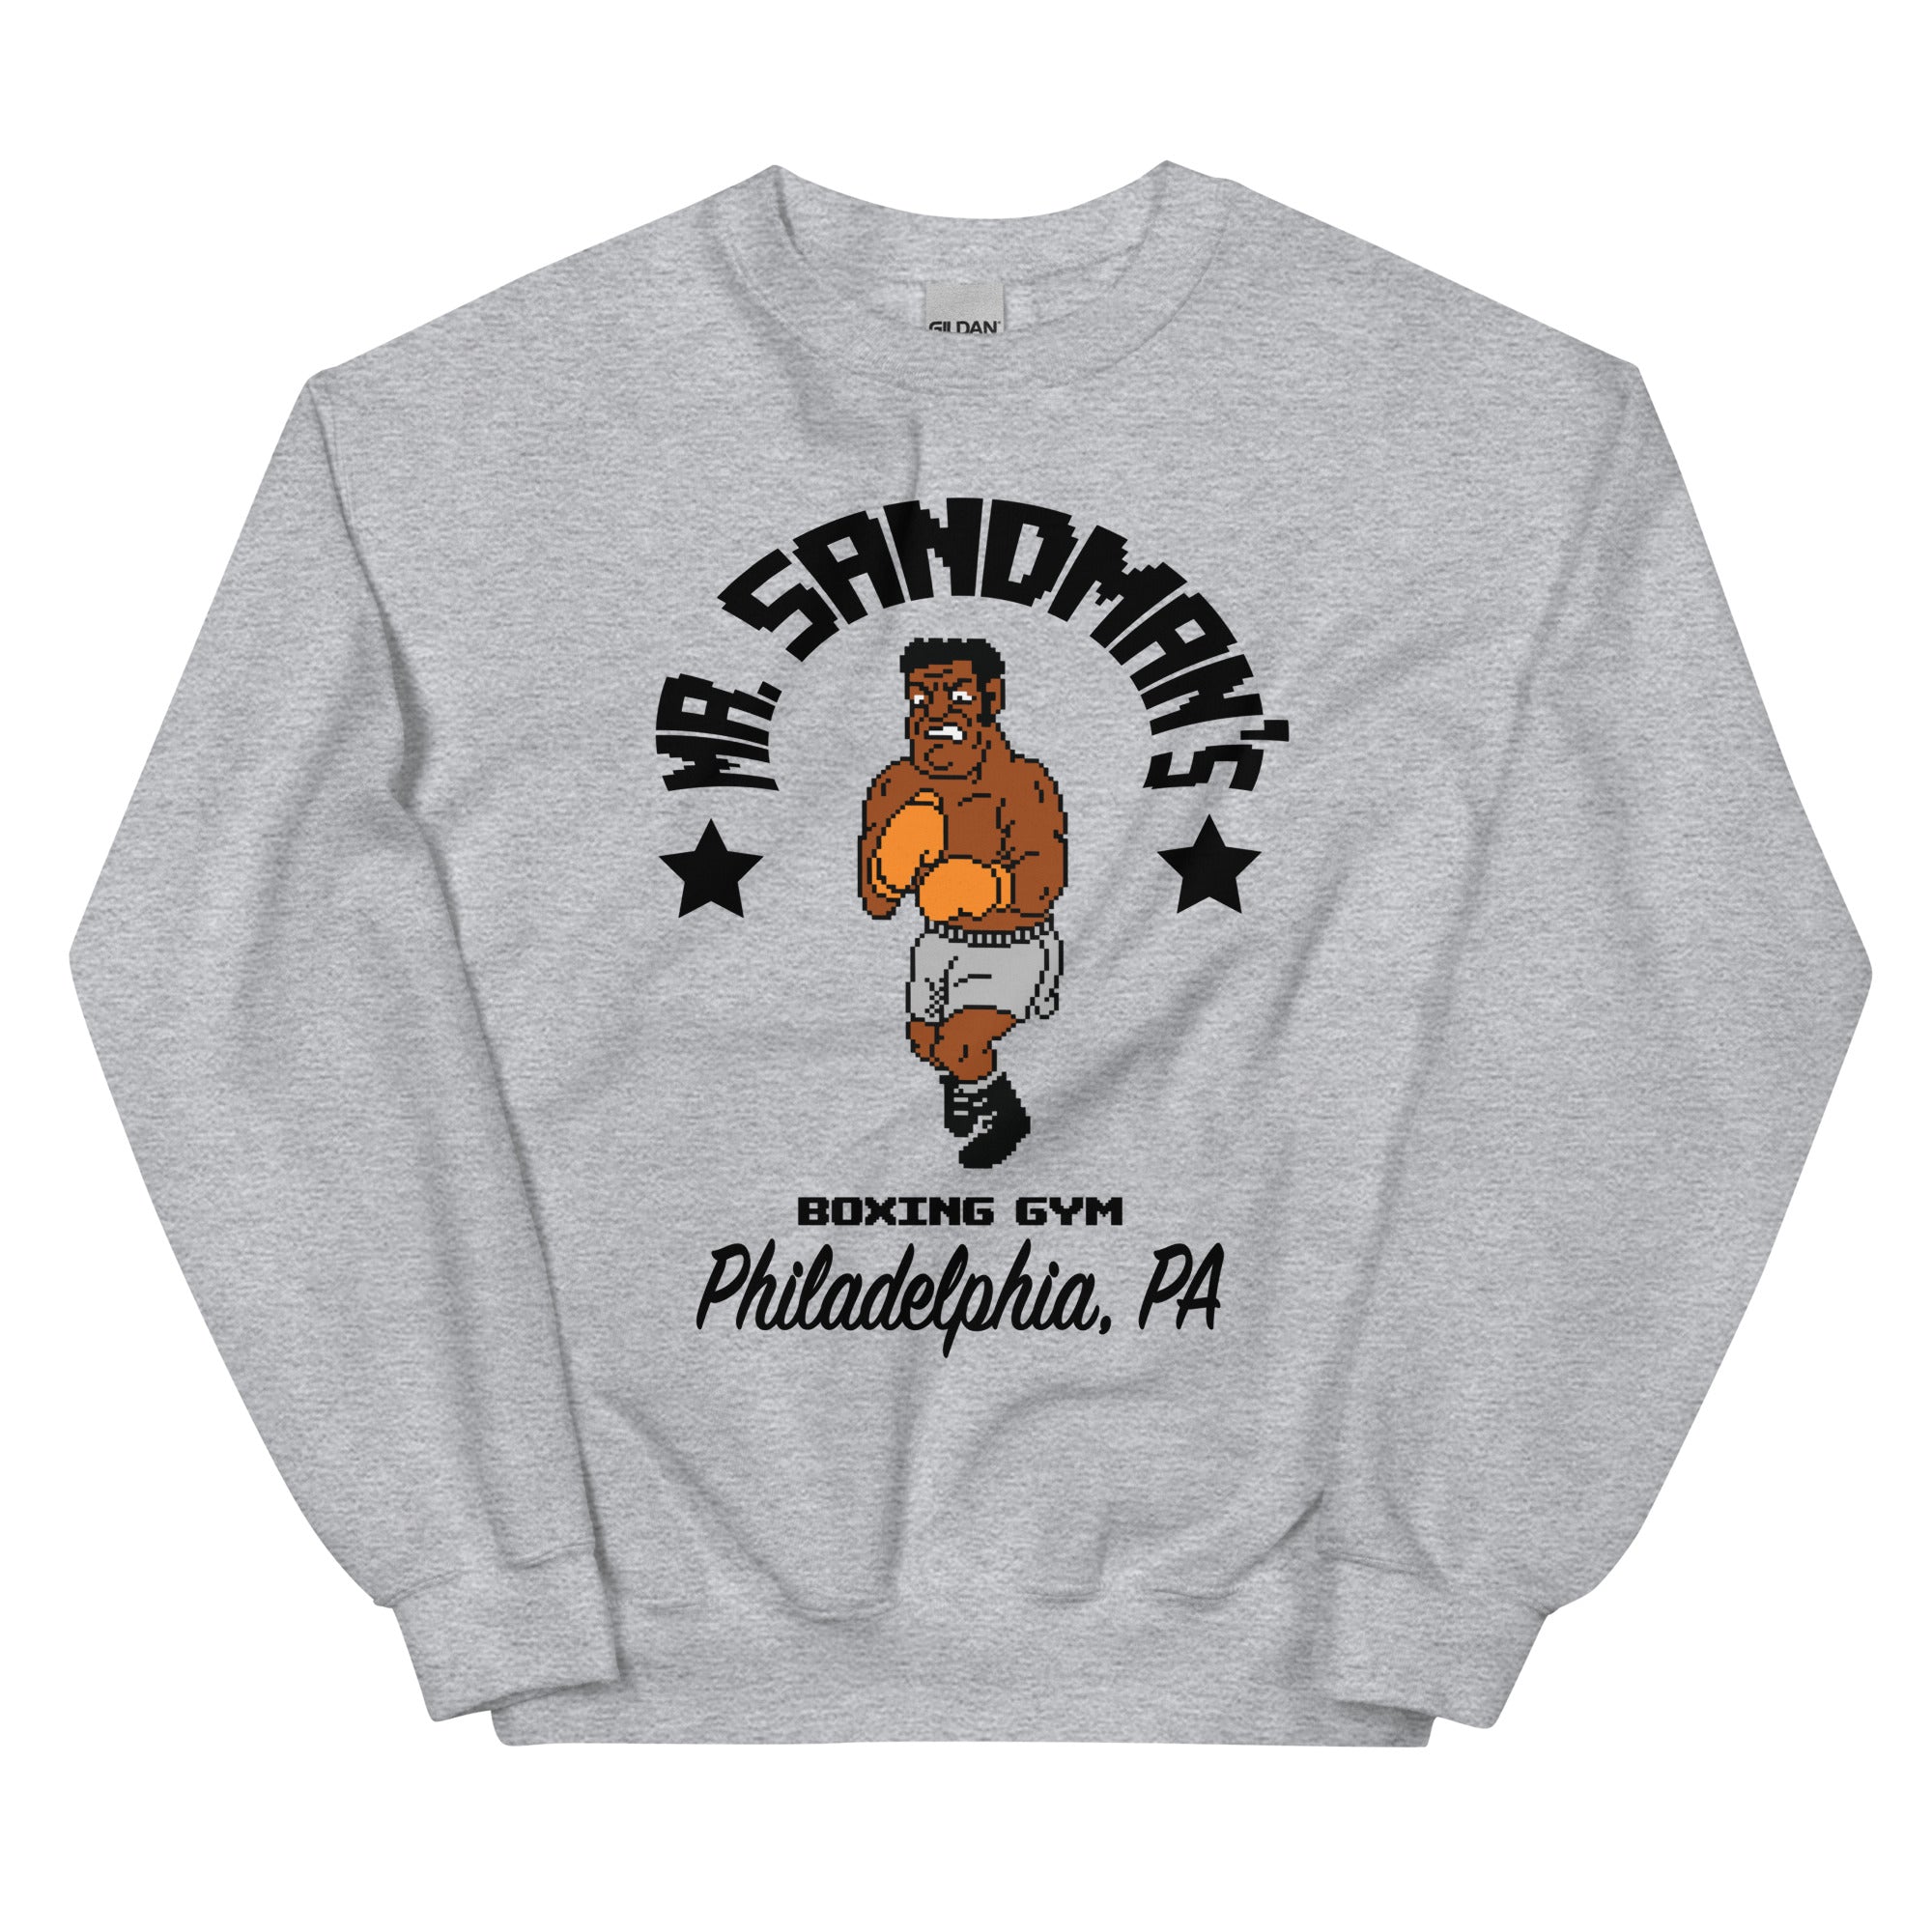 "Mr. Sandman's Boxing Gym" Sweatshirt